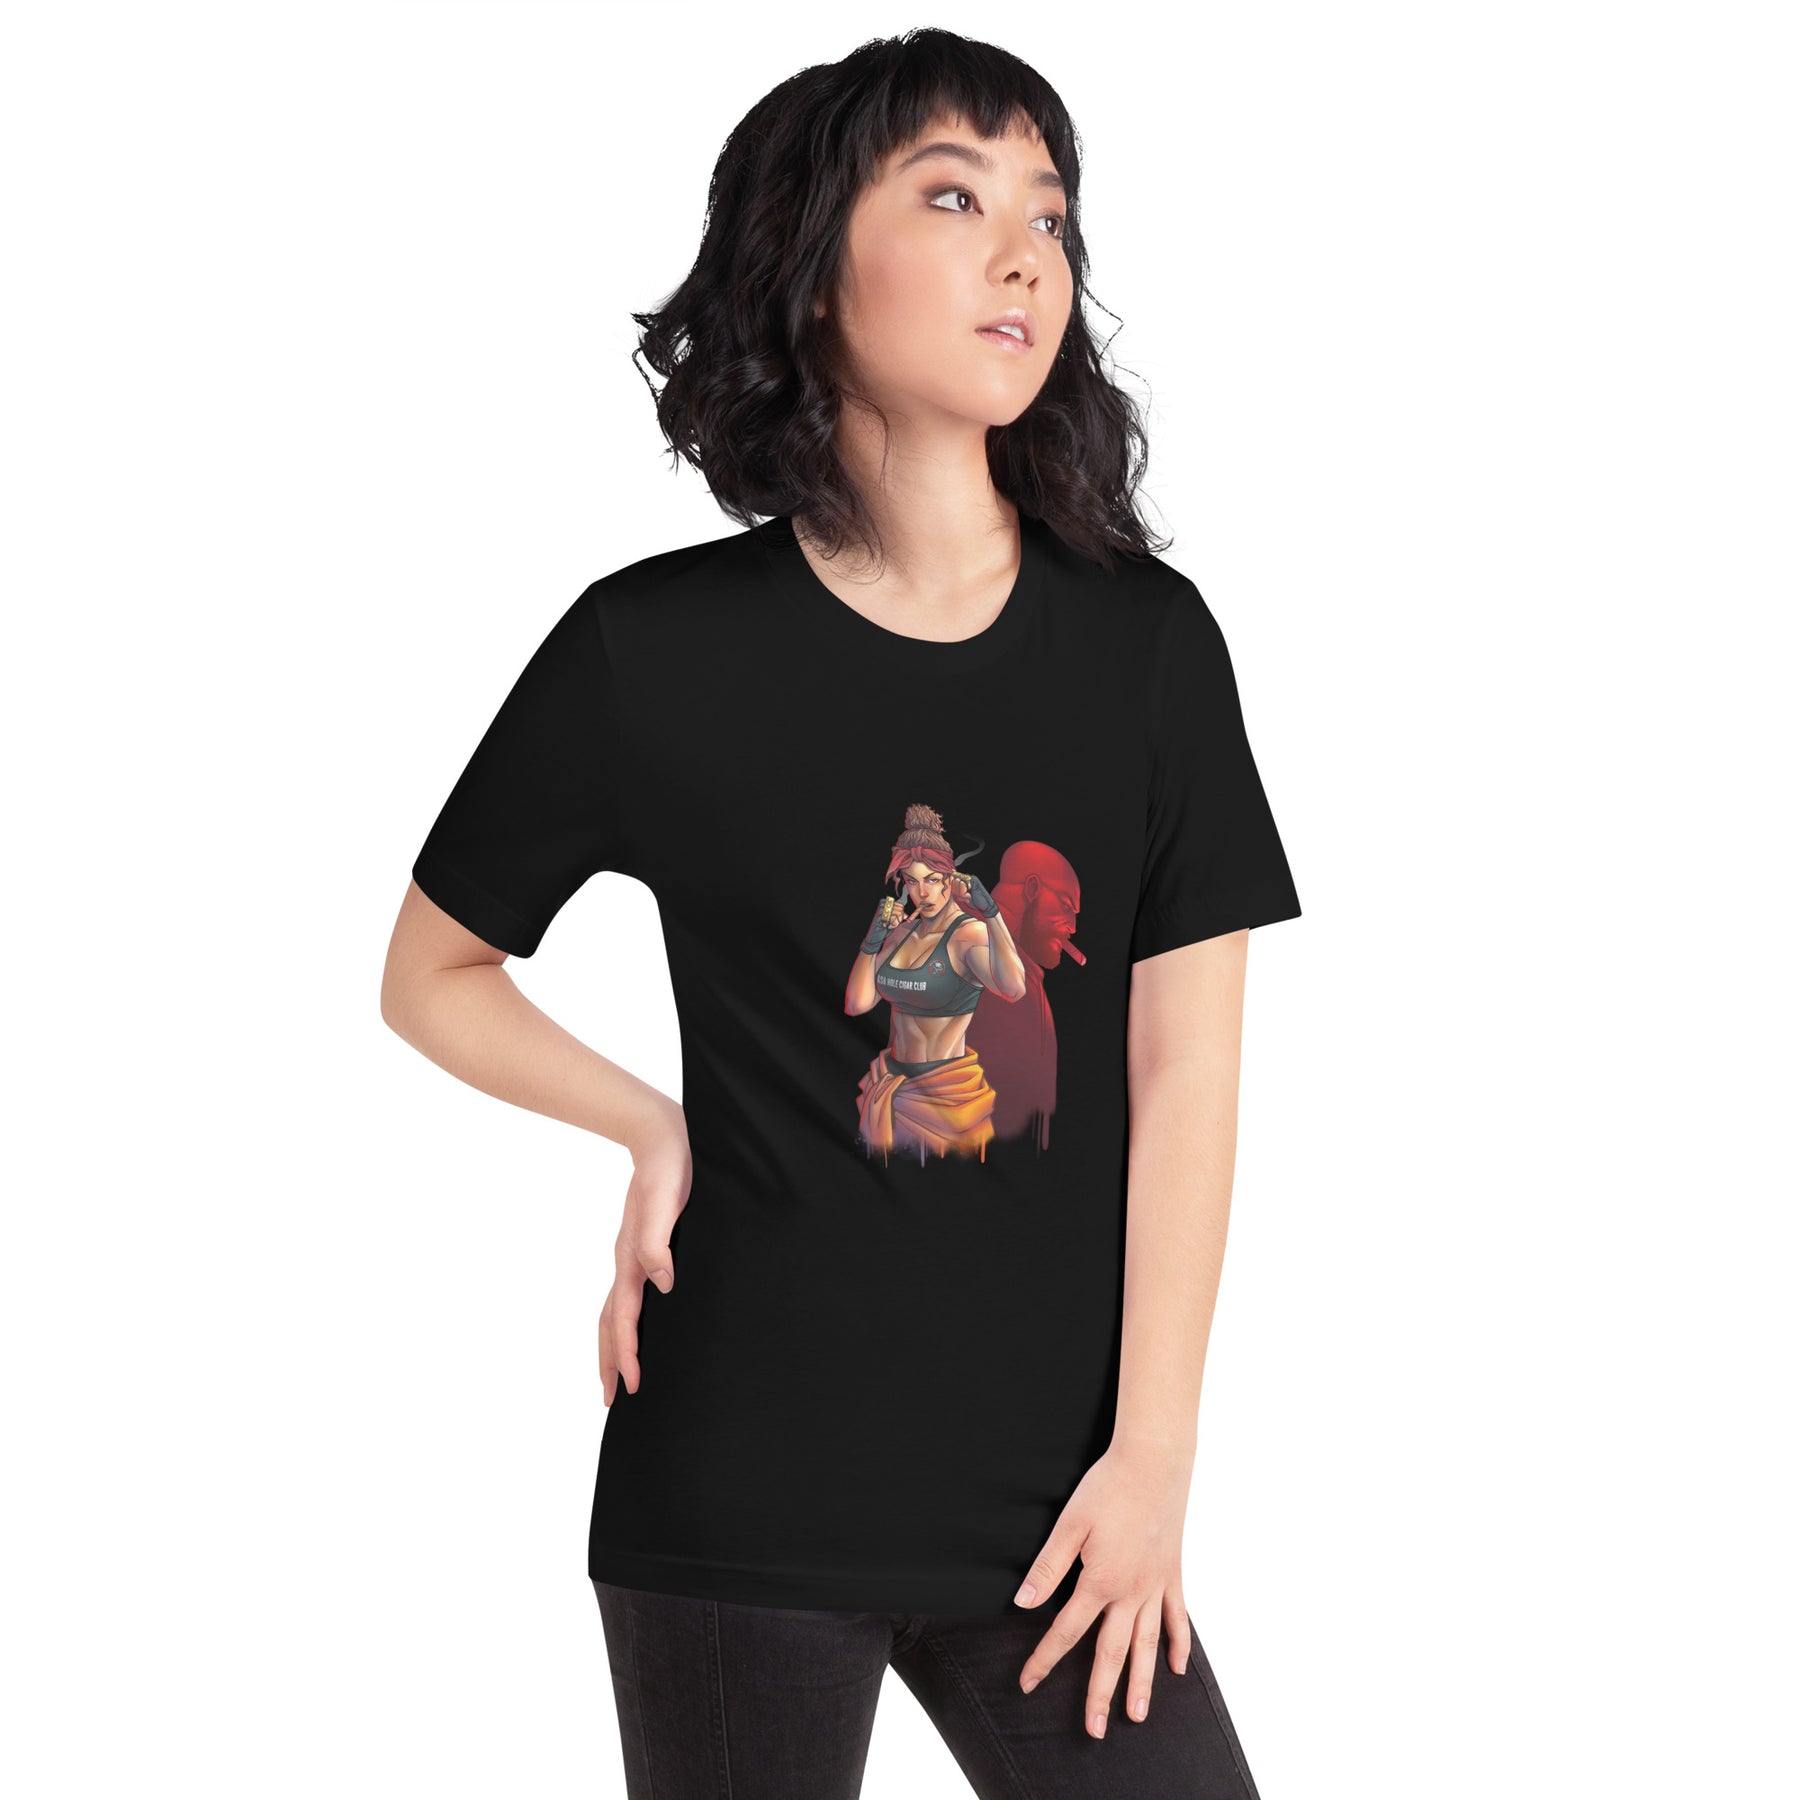 Women's Image Comic Collection T-Shirt